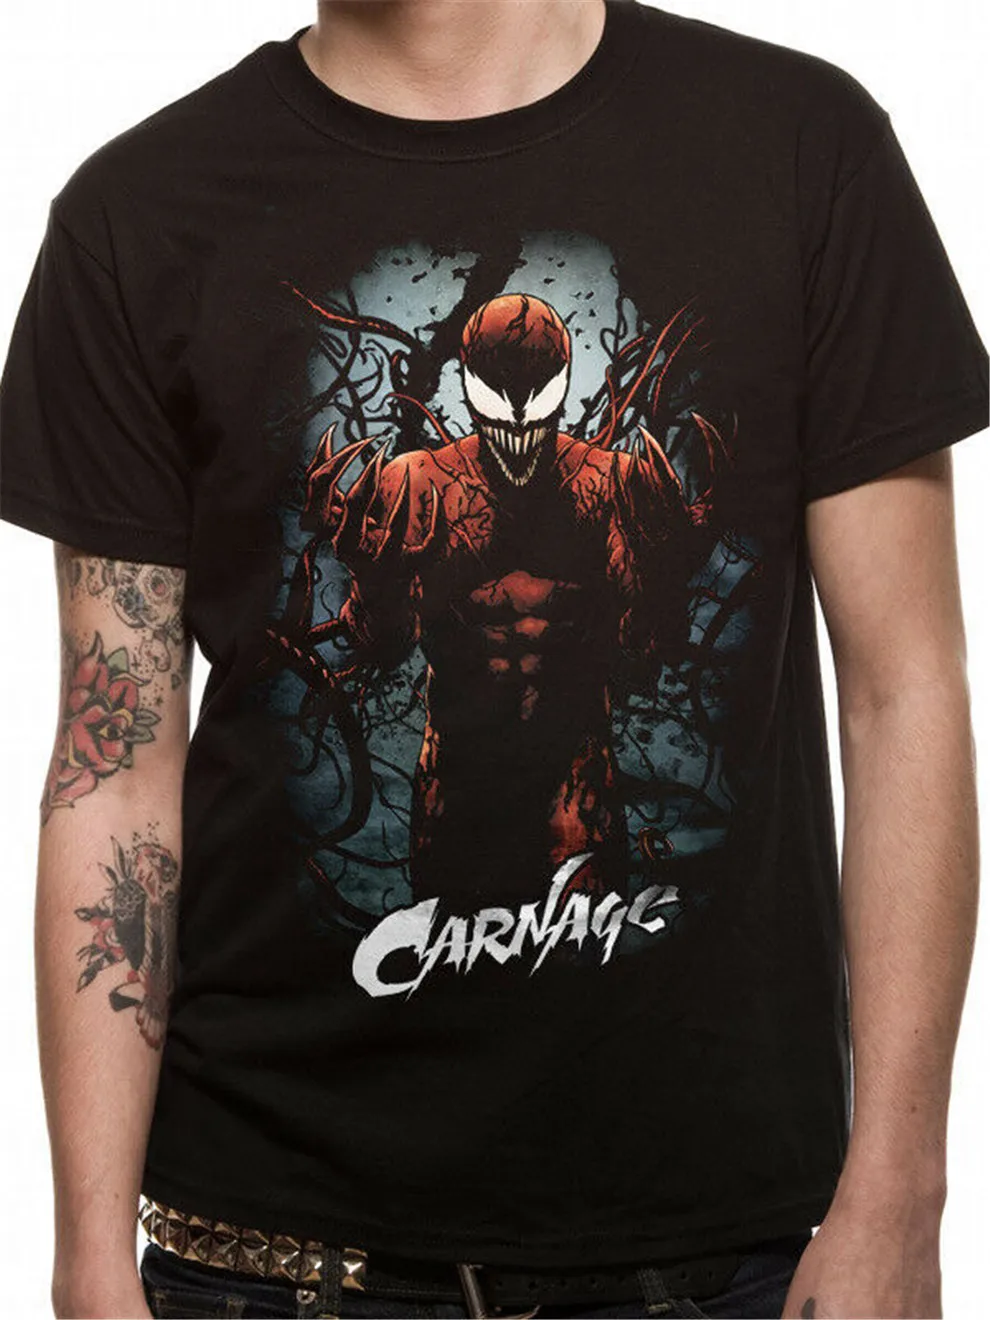 Фото Carnage Comic Poster Venom Marvel Spider Man Черная Мужская футболка Забавный дизайн